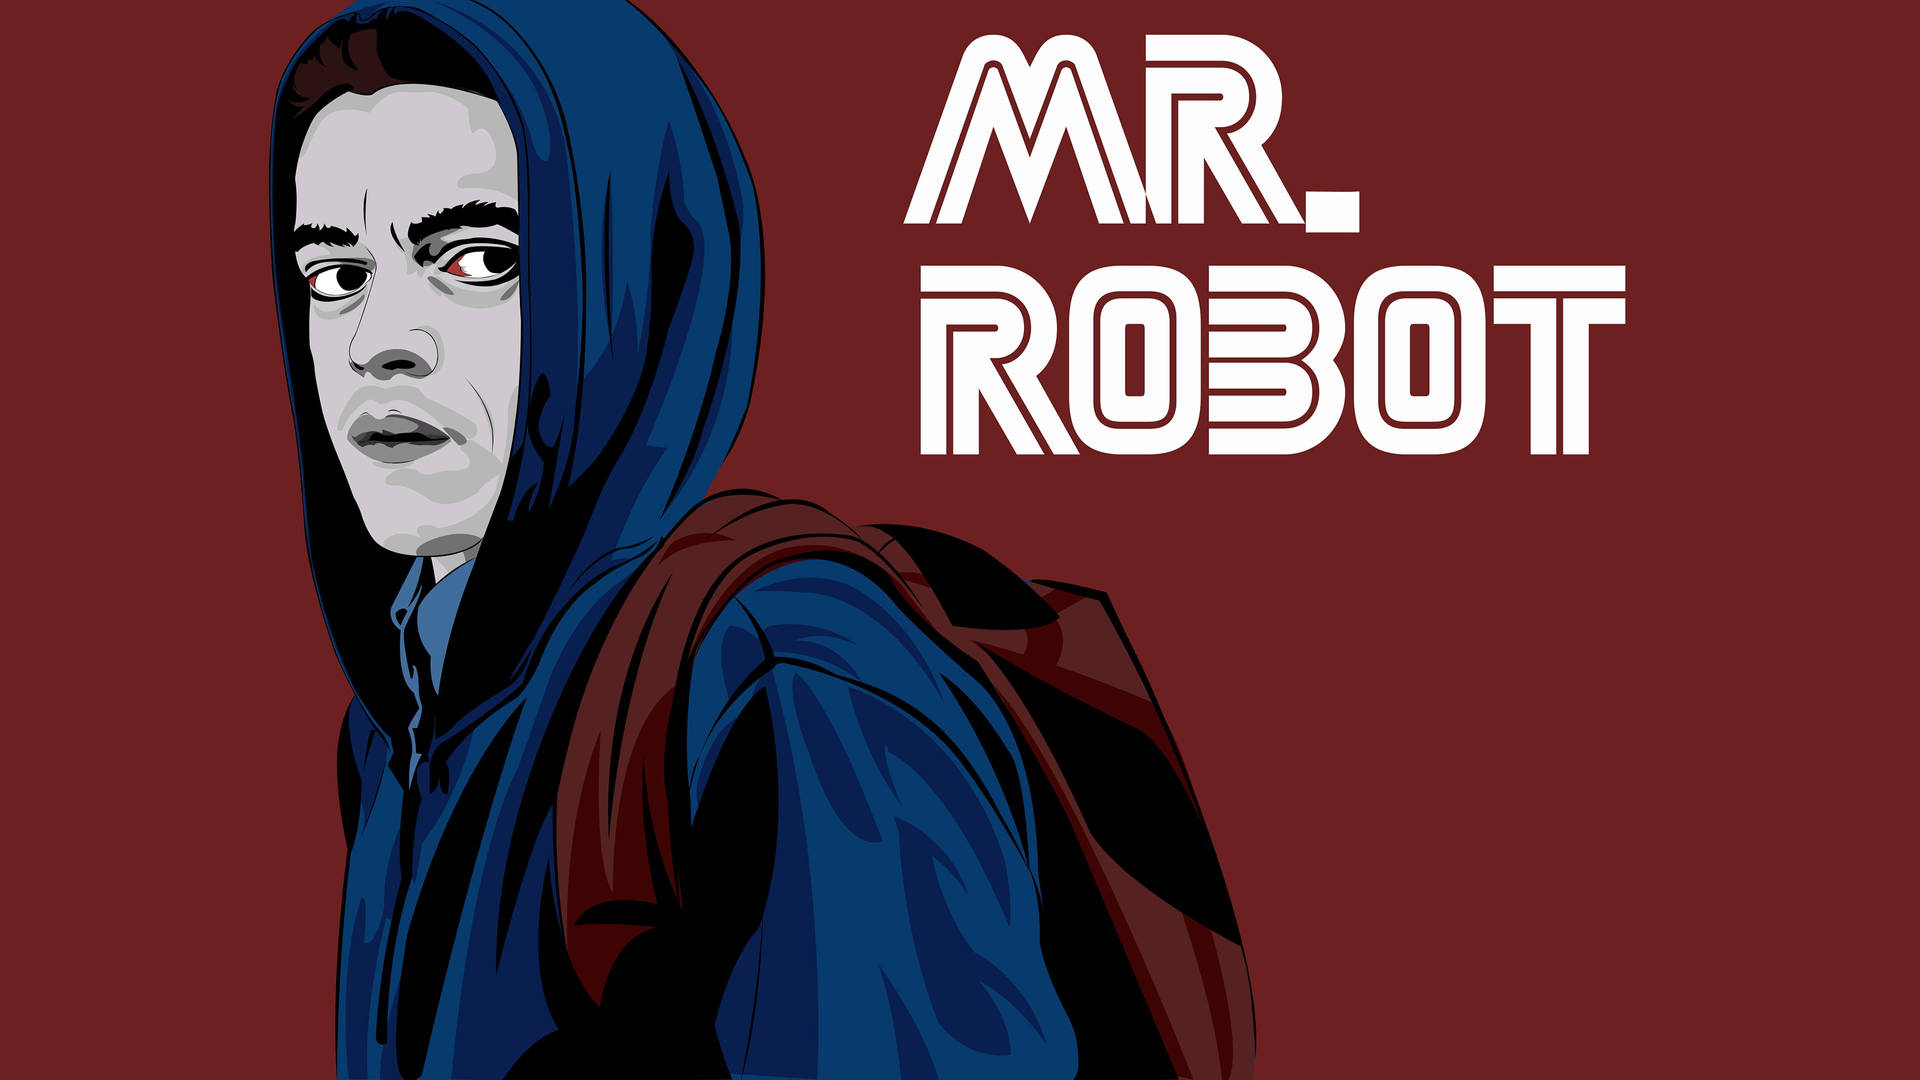 Mr. Robot Poster Background